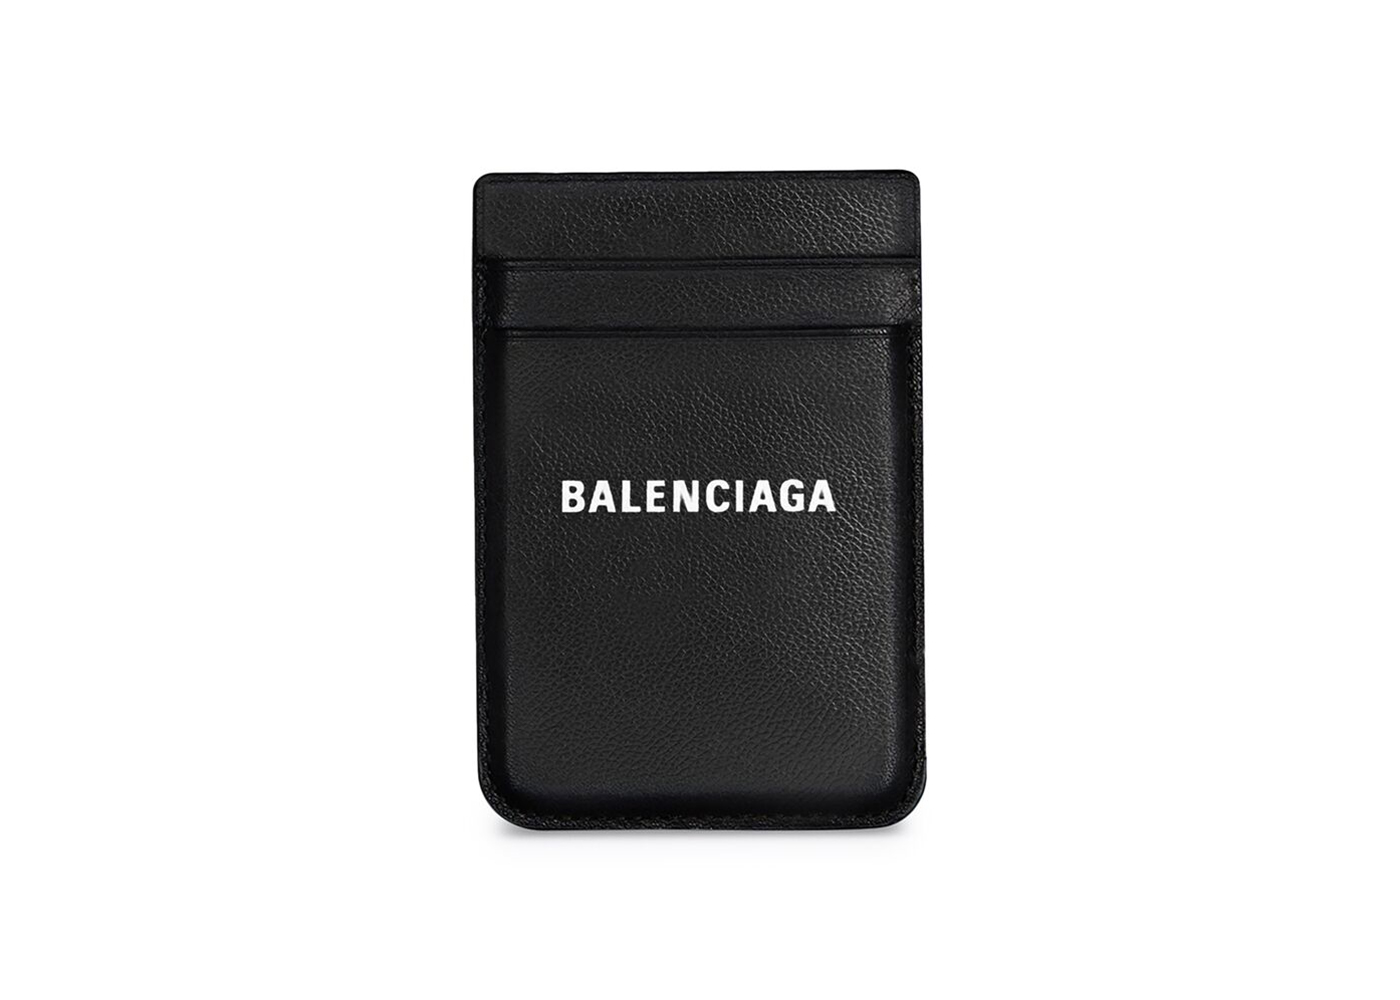 Chia sẻ với hơn 76 balenciaga card wallet không thể bỏ qua  trieuson5